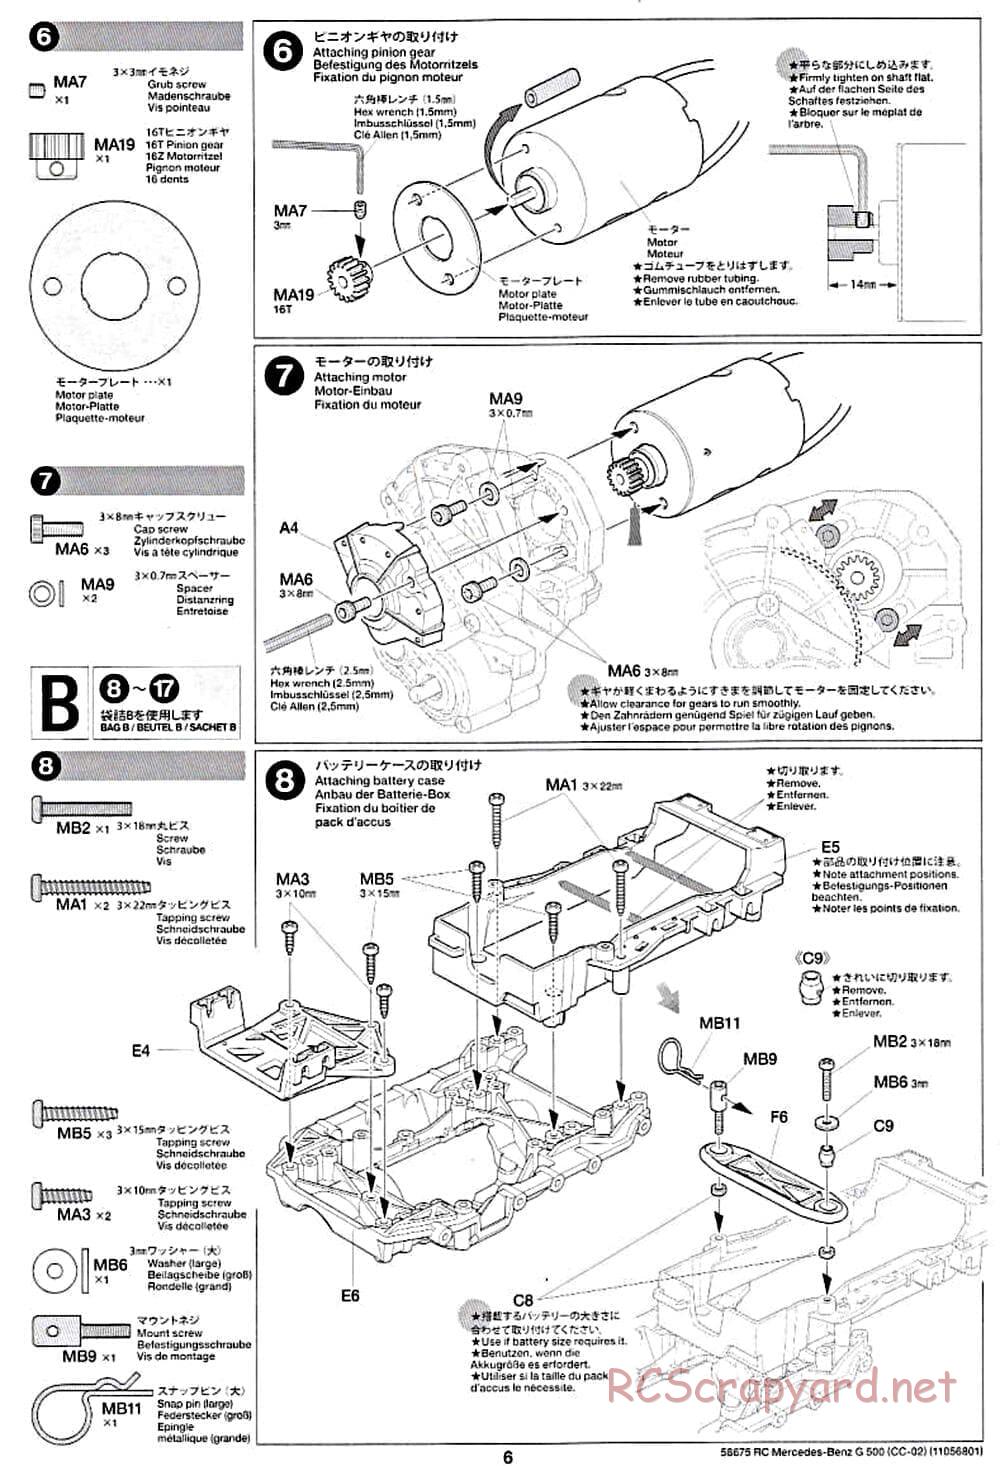 Tamiya - Mercedes-Benz G500 - CC-02 Chassis - Manual - Page 6